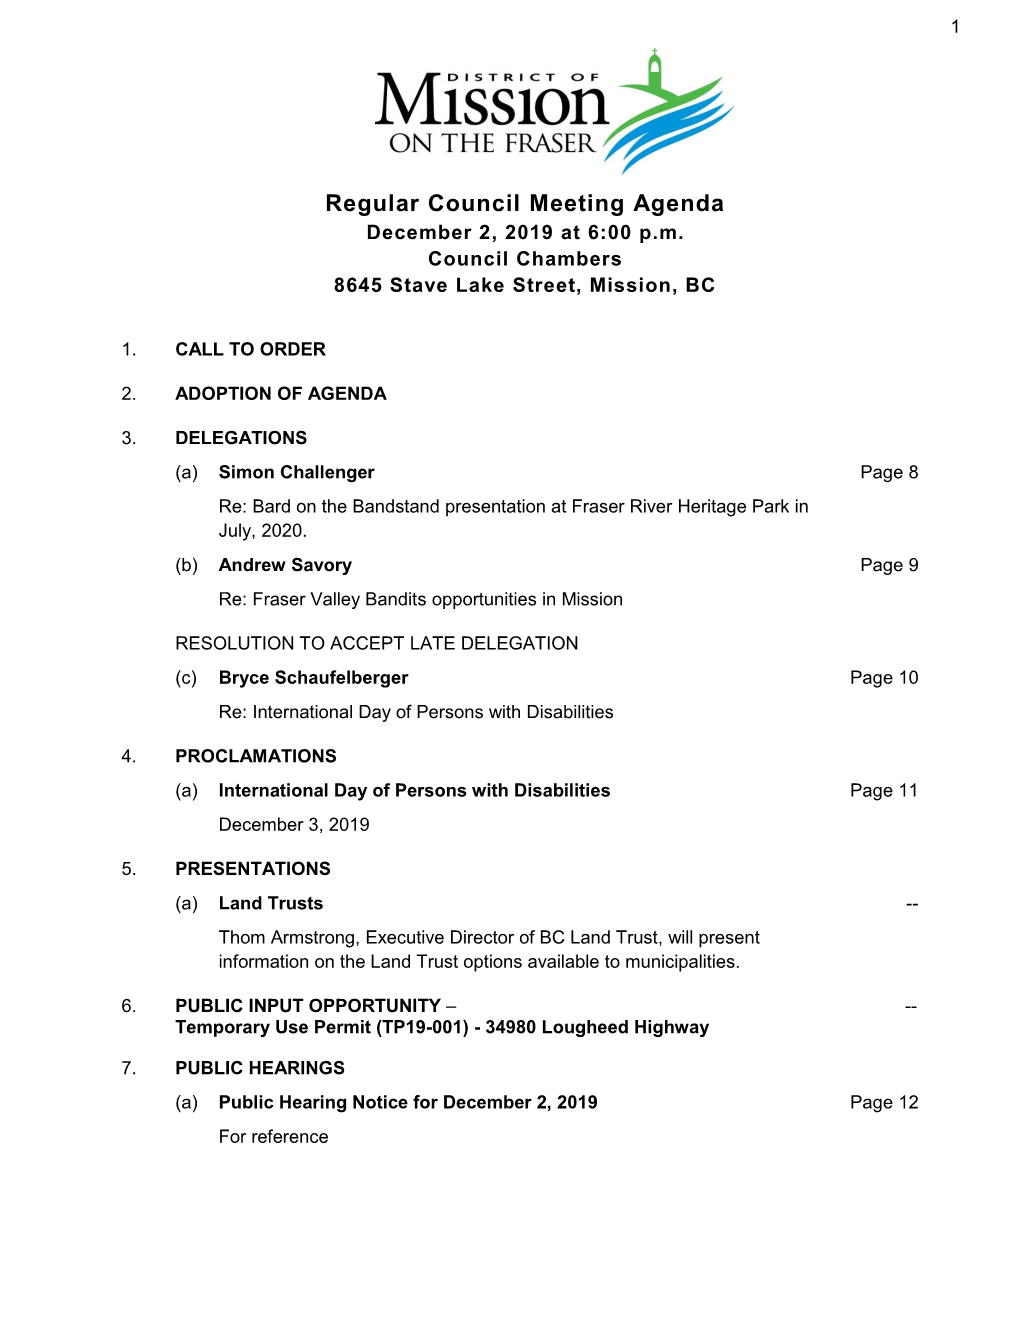 Regular Council Meeting Agenda December 2, 2019 at 6:00 P.M